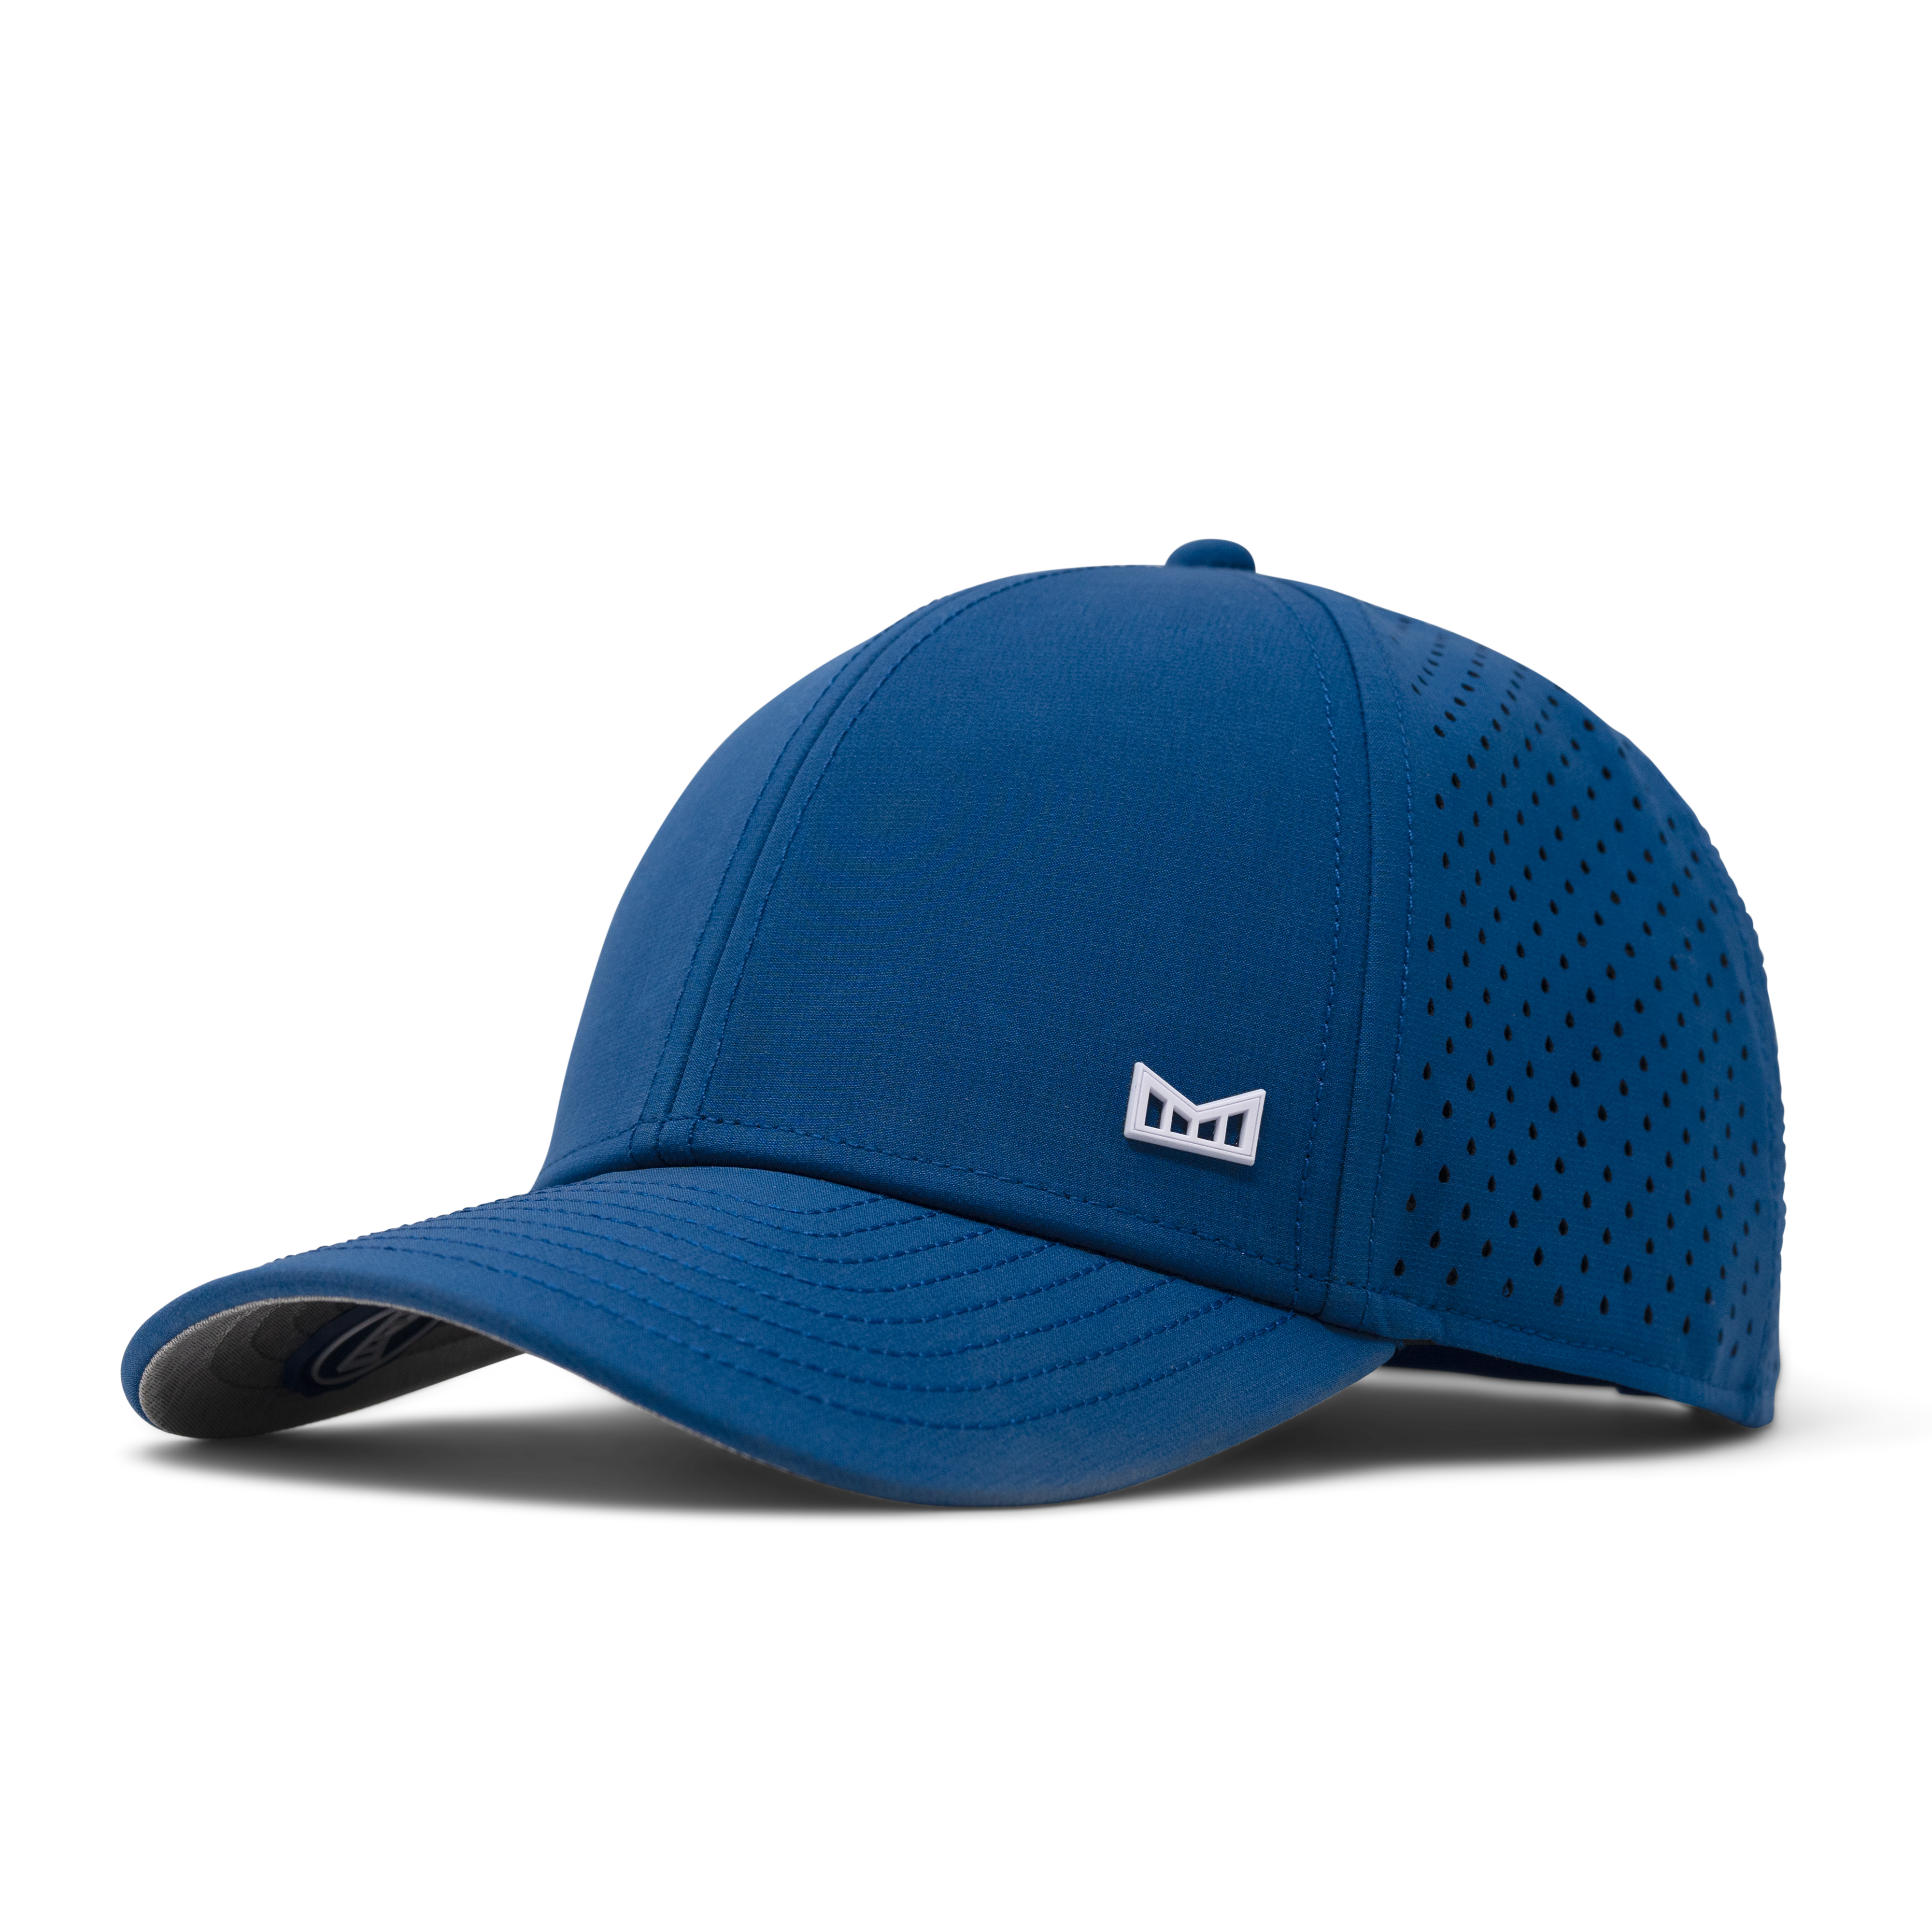 All Hats, Shop Premium & Stylish Hats & Headwear